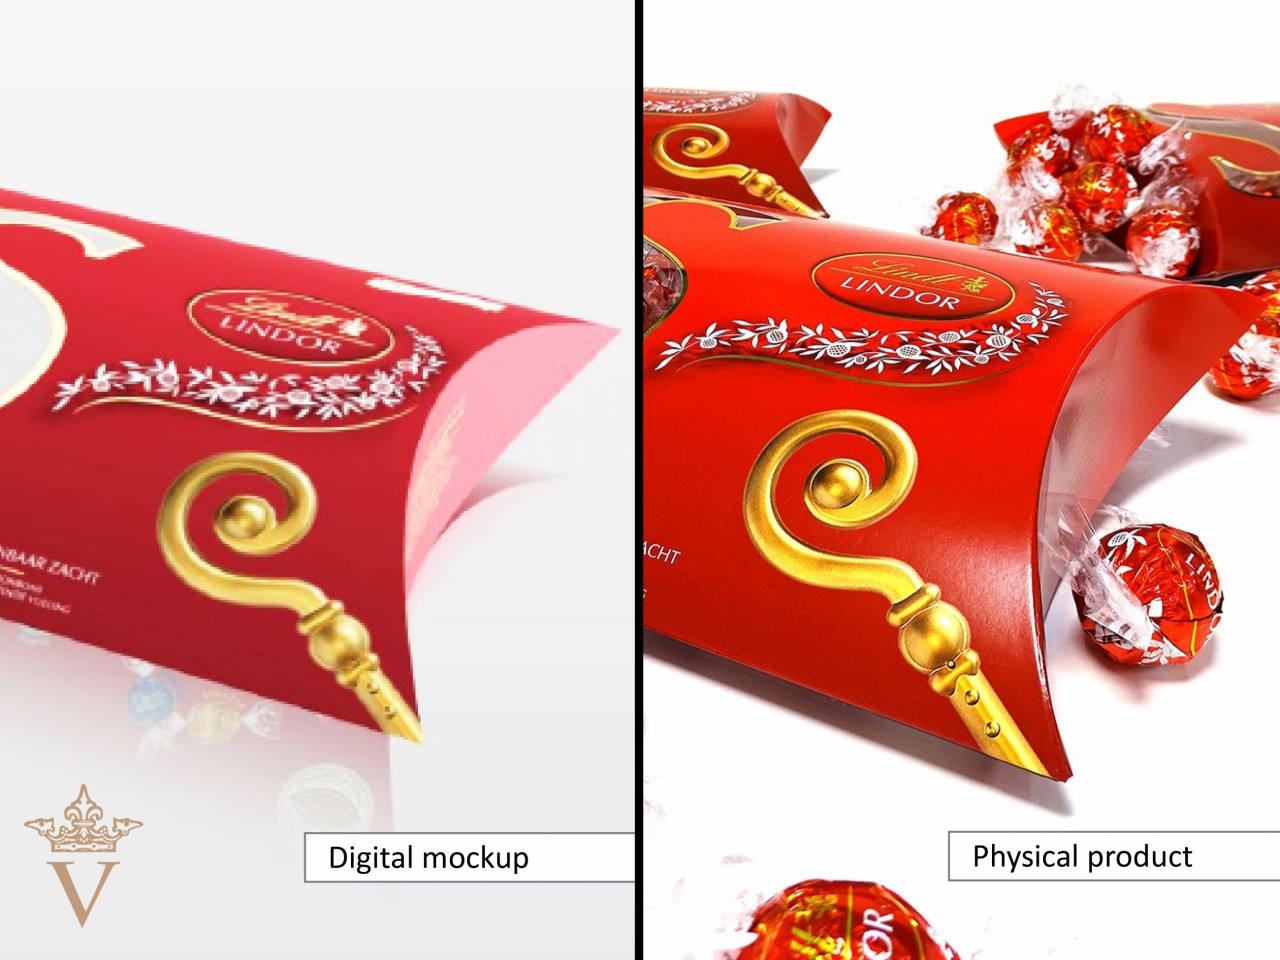 Lindt folding carton - 3D digital mockup vs. physical sample